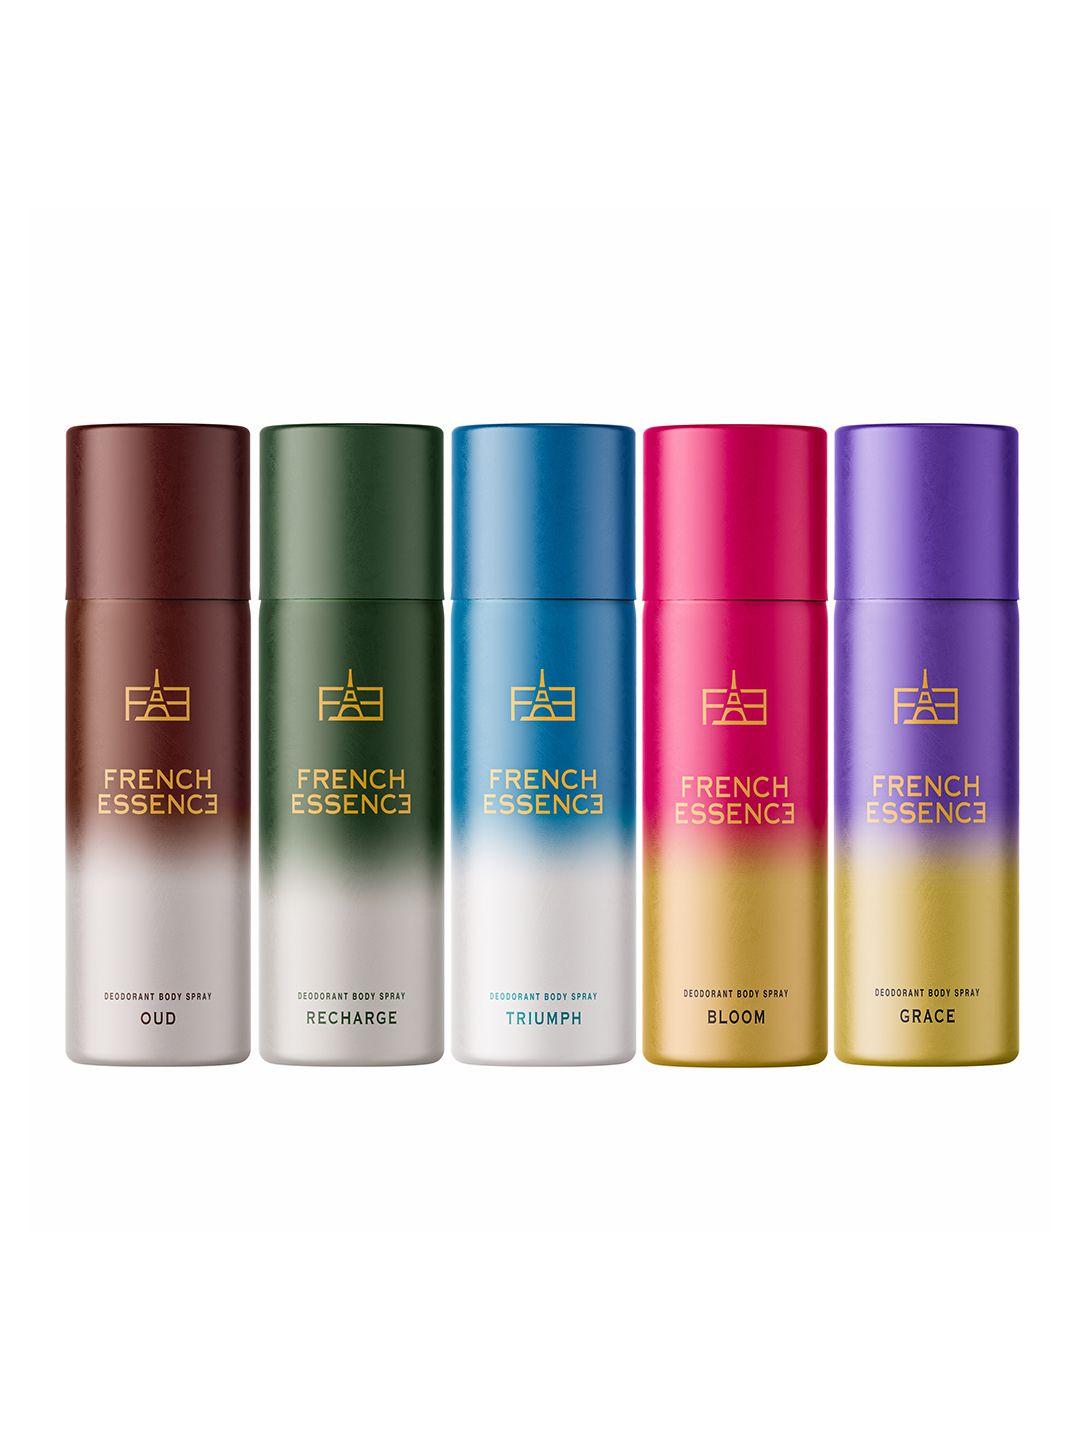 french essence set of 5 deodorant body spray - 50ml each